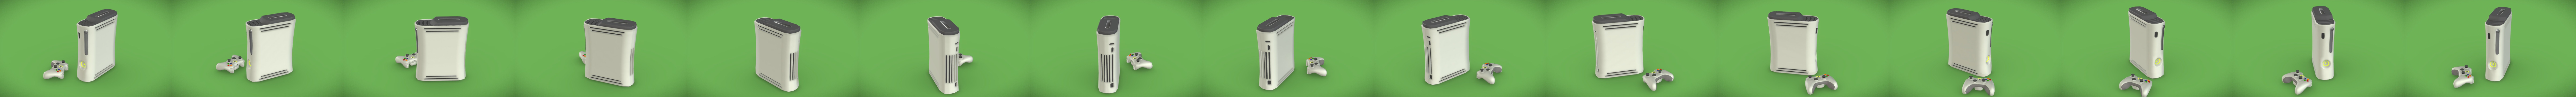 Xbox 360 Fat Modelo 3D - TurboSquid 1231861